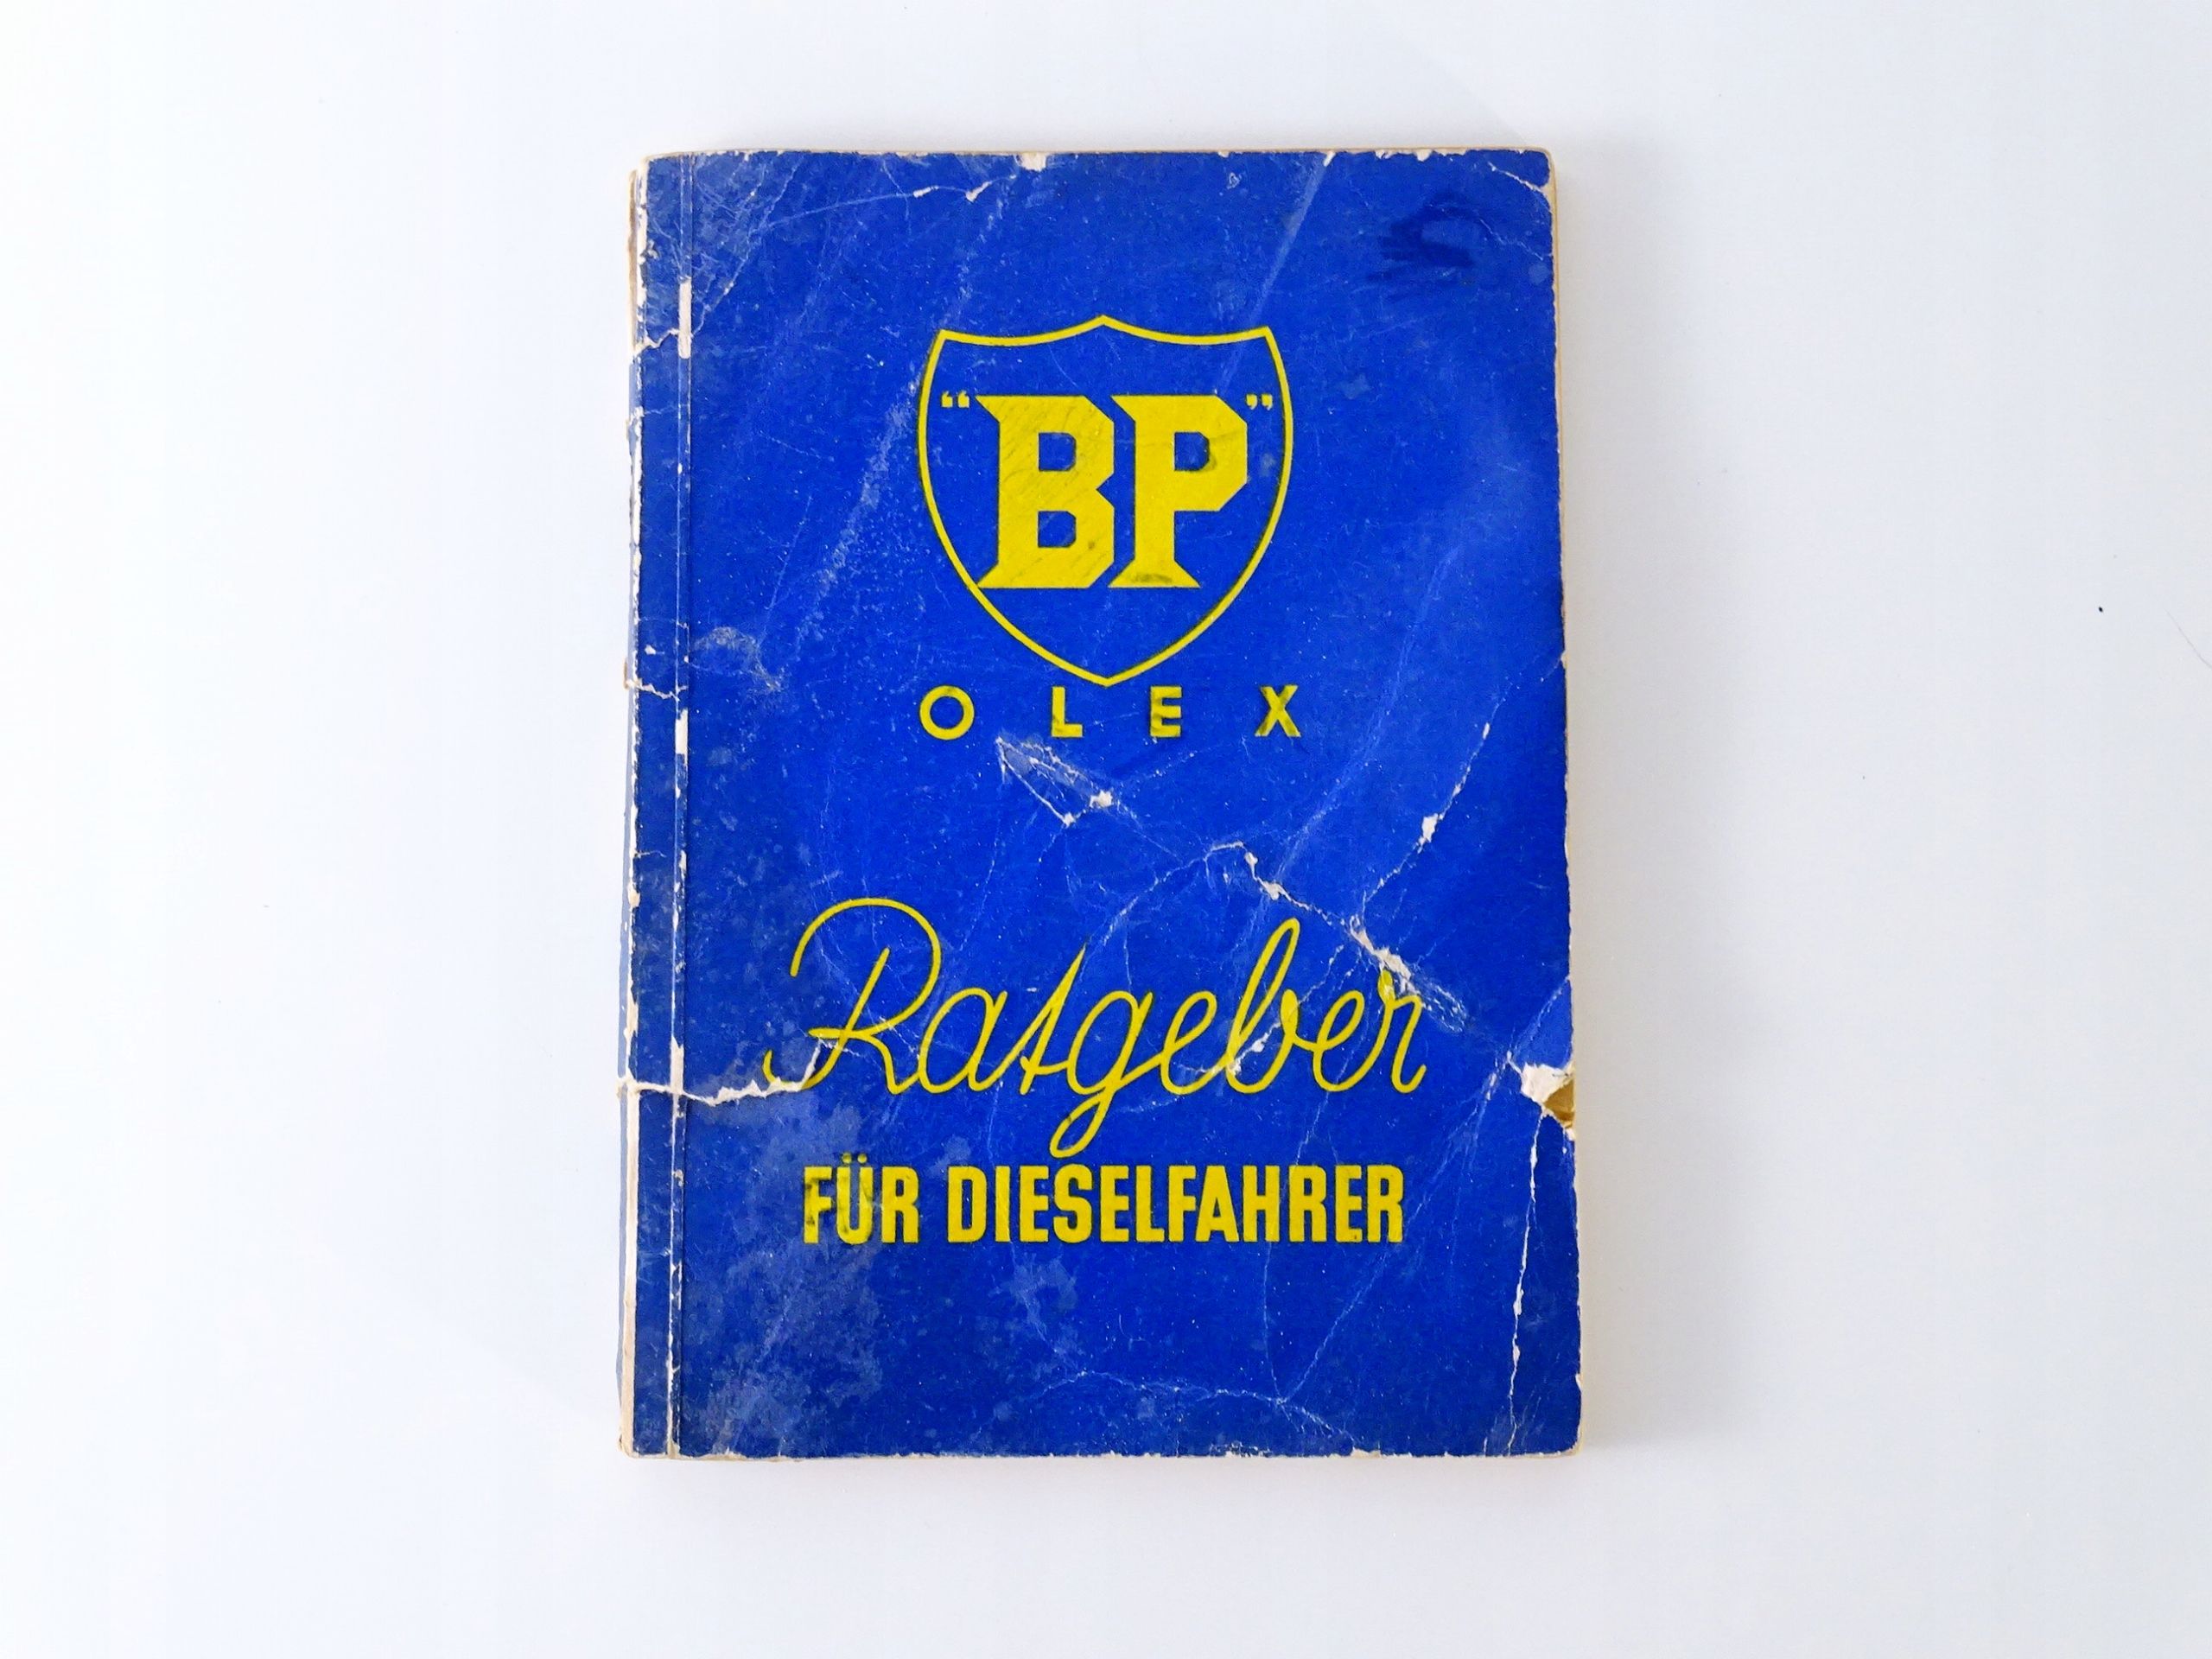 bp olex ratgeber poradnik diesel lata 1930/40